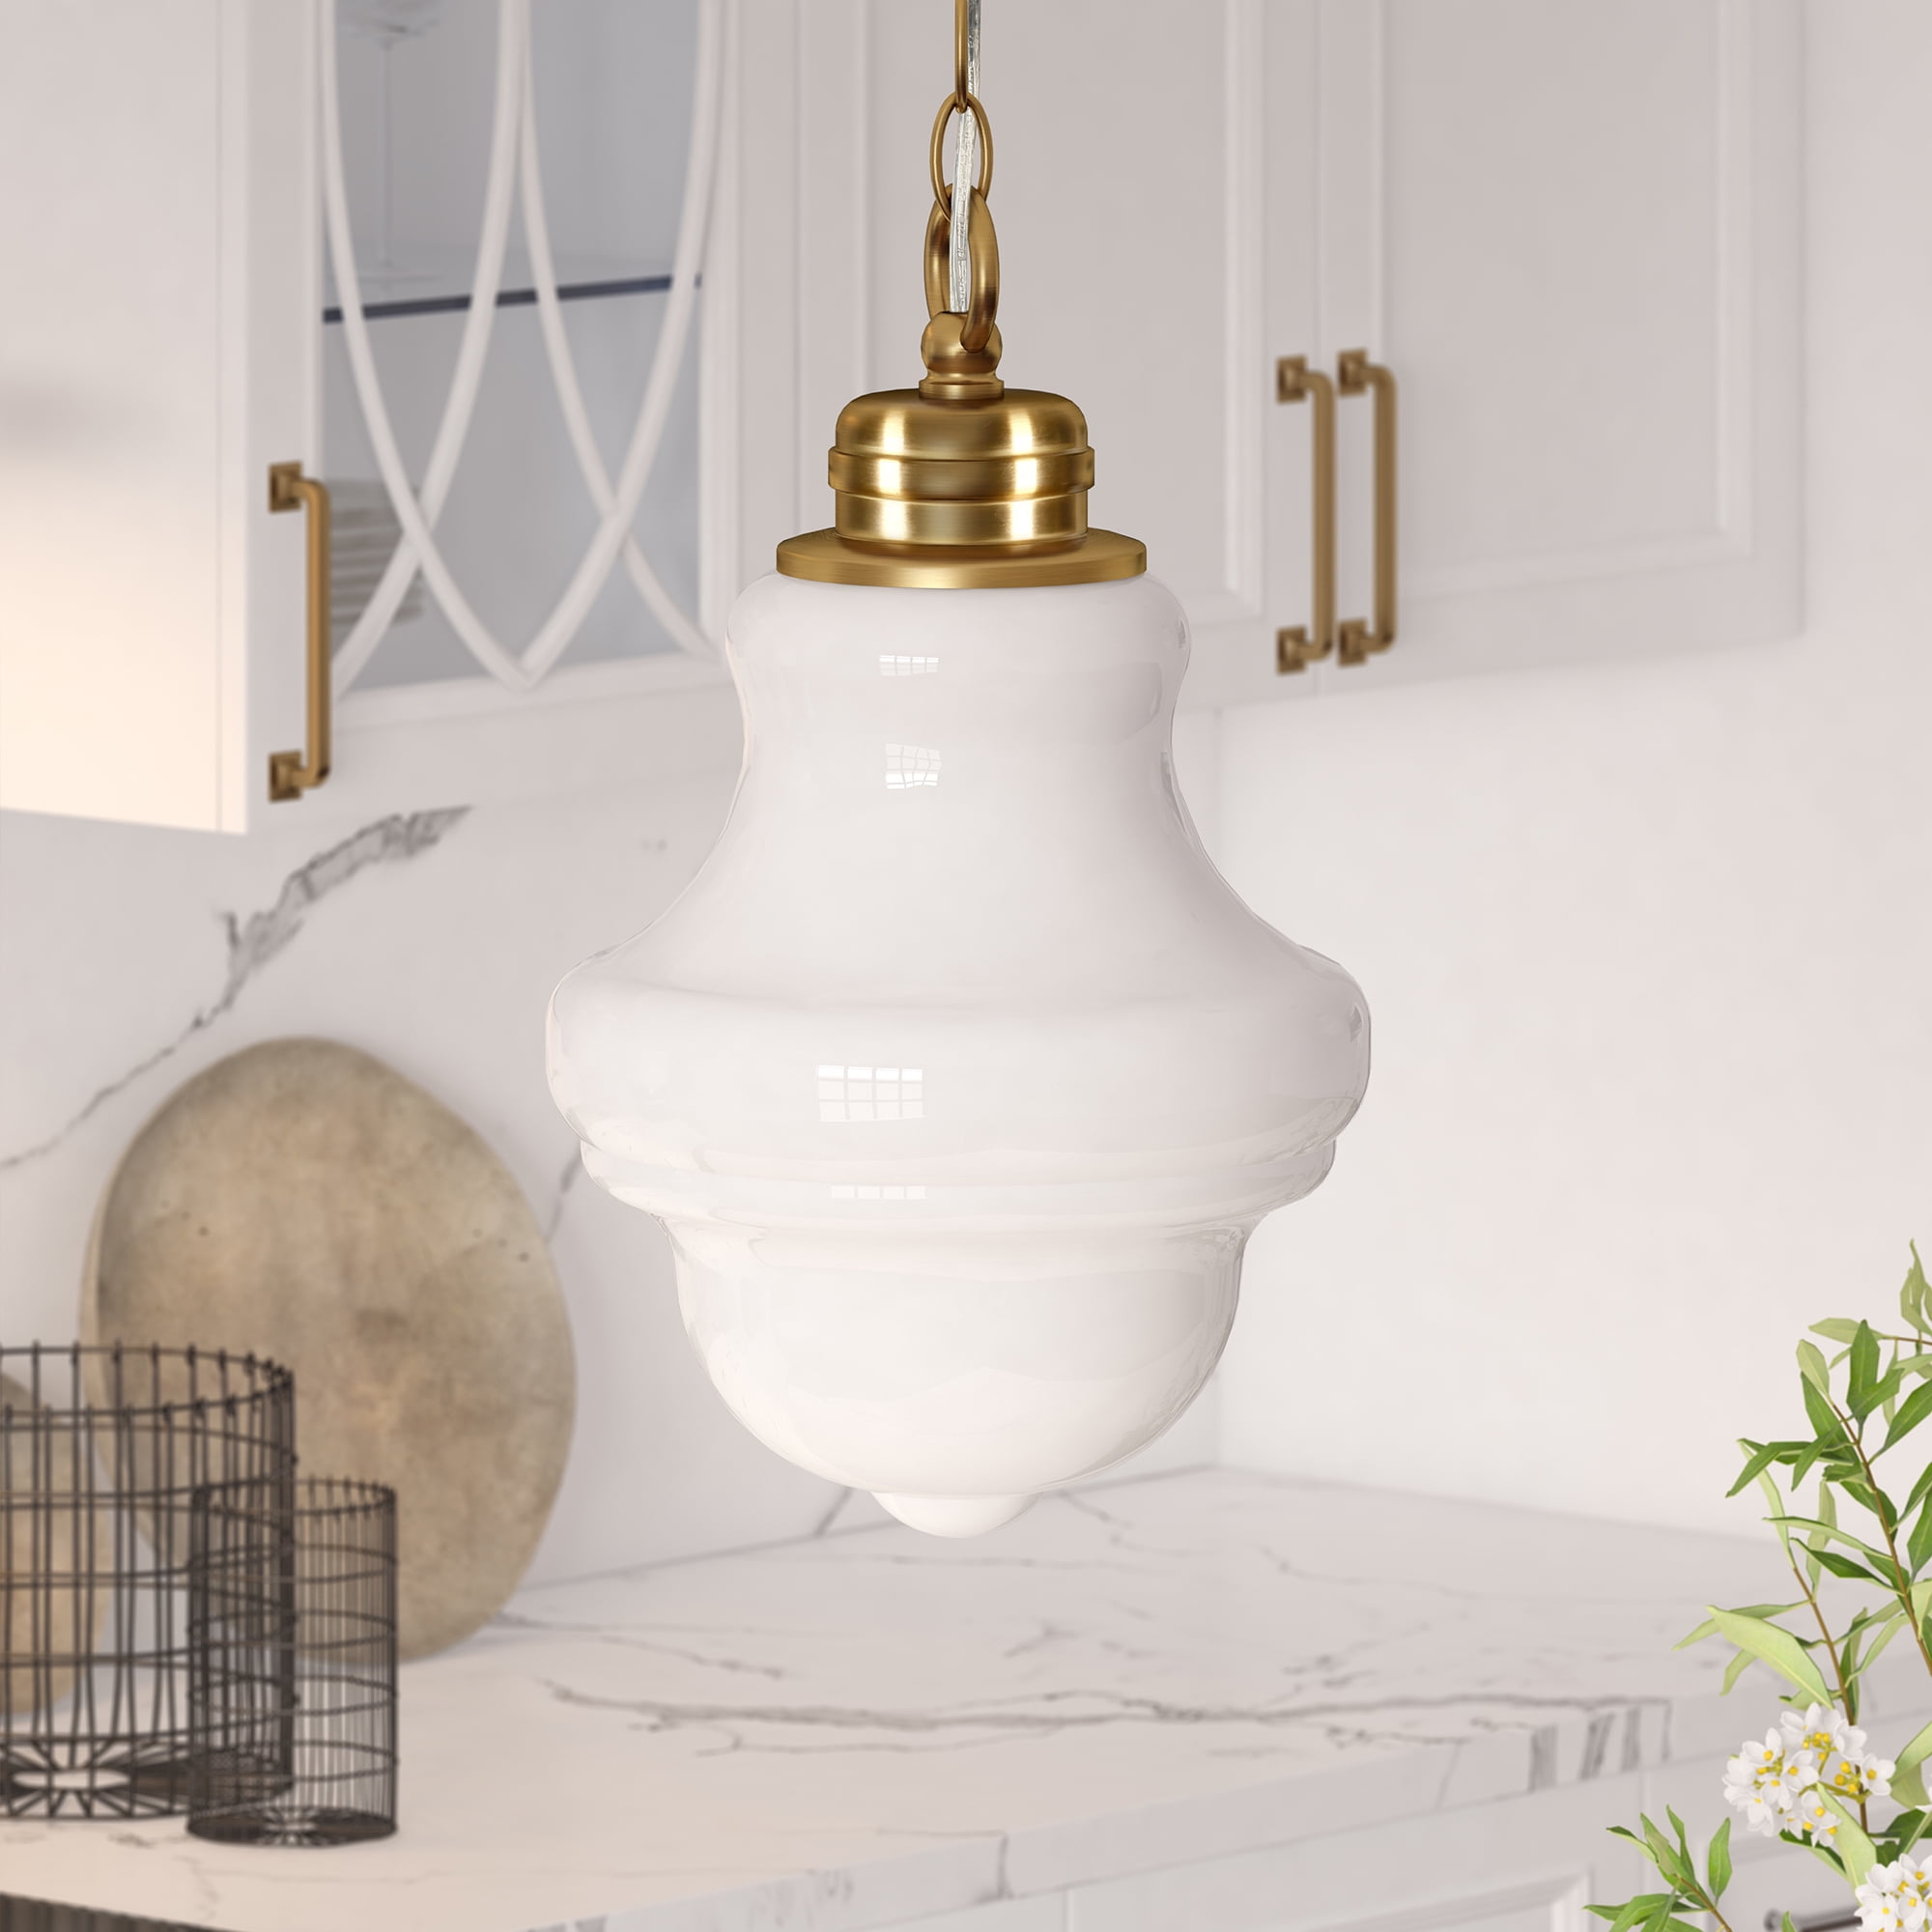 Vintage Industrial Pendant Light w/ Flat Brass Shade Machine Age Hanging Lamp